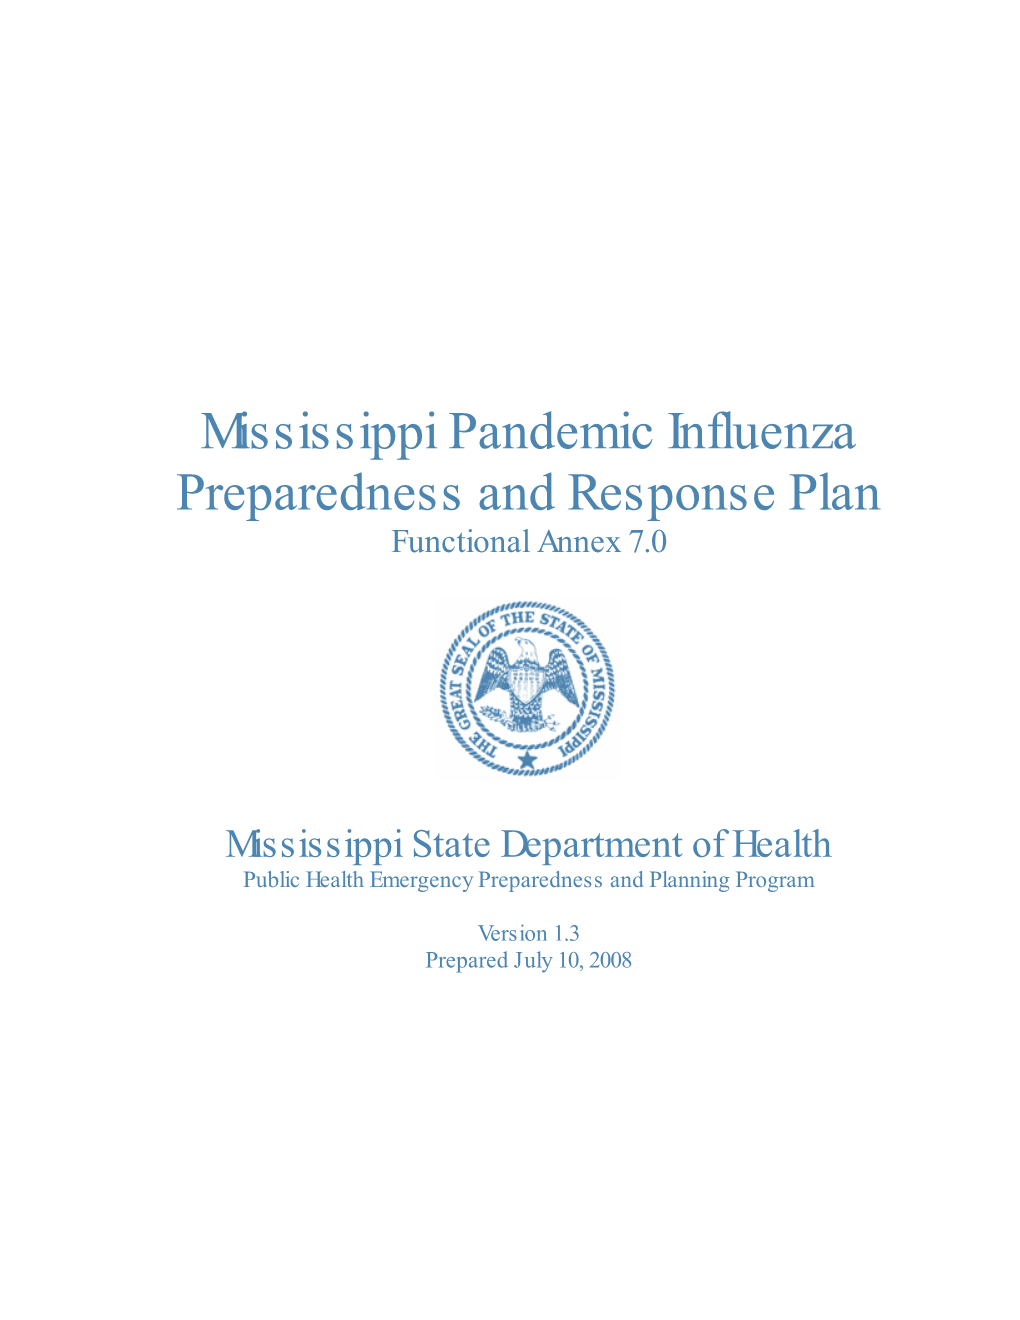 Mississippi Pandemic Influenza Preparedness and Response Plan Functional Annex 7.0